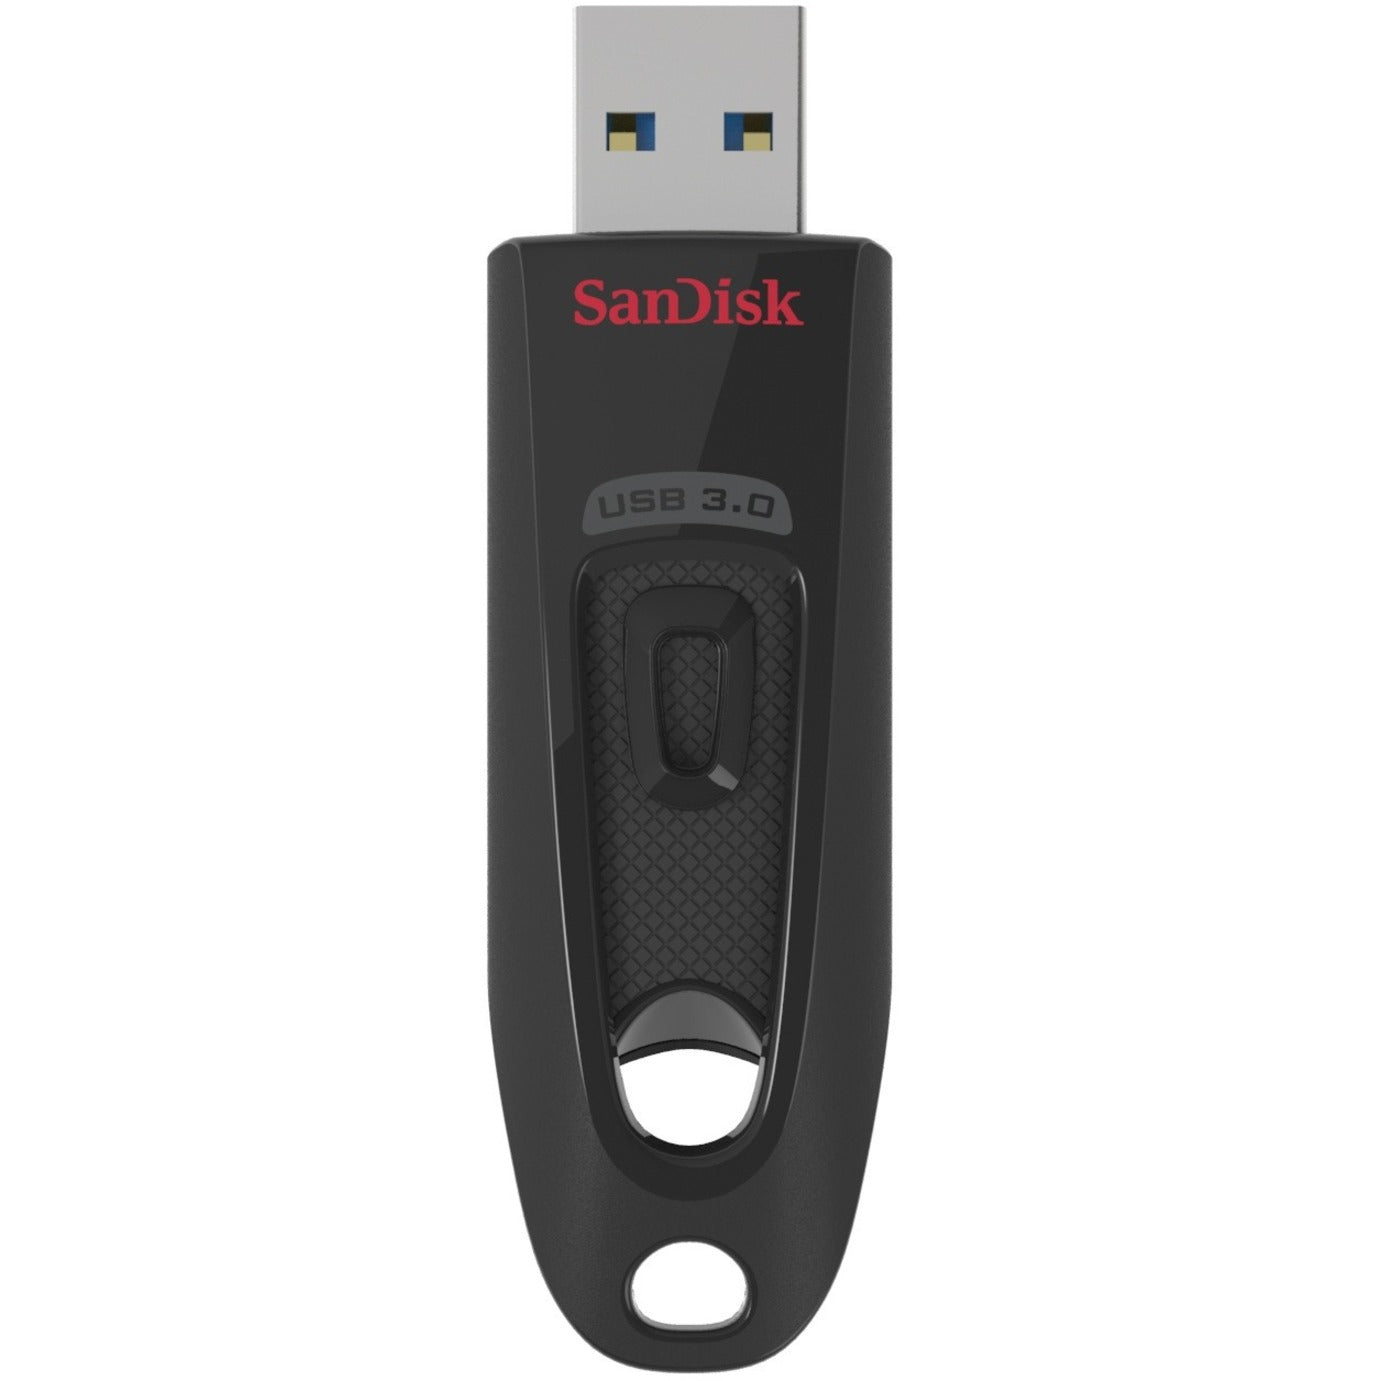 SanDisk SDCZ48-128G-AW46 128GB Ultra USB 3.0 Flash Drive, 5 Year Warranty, Black